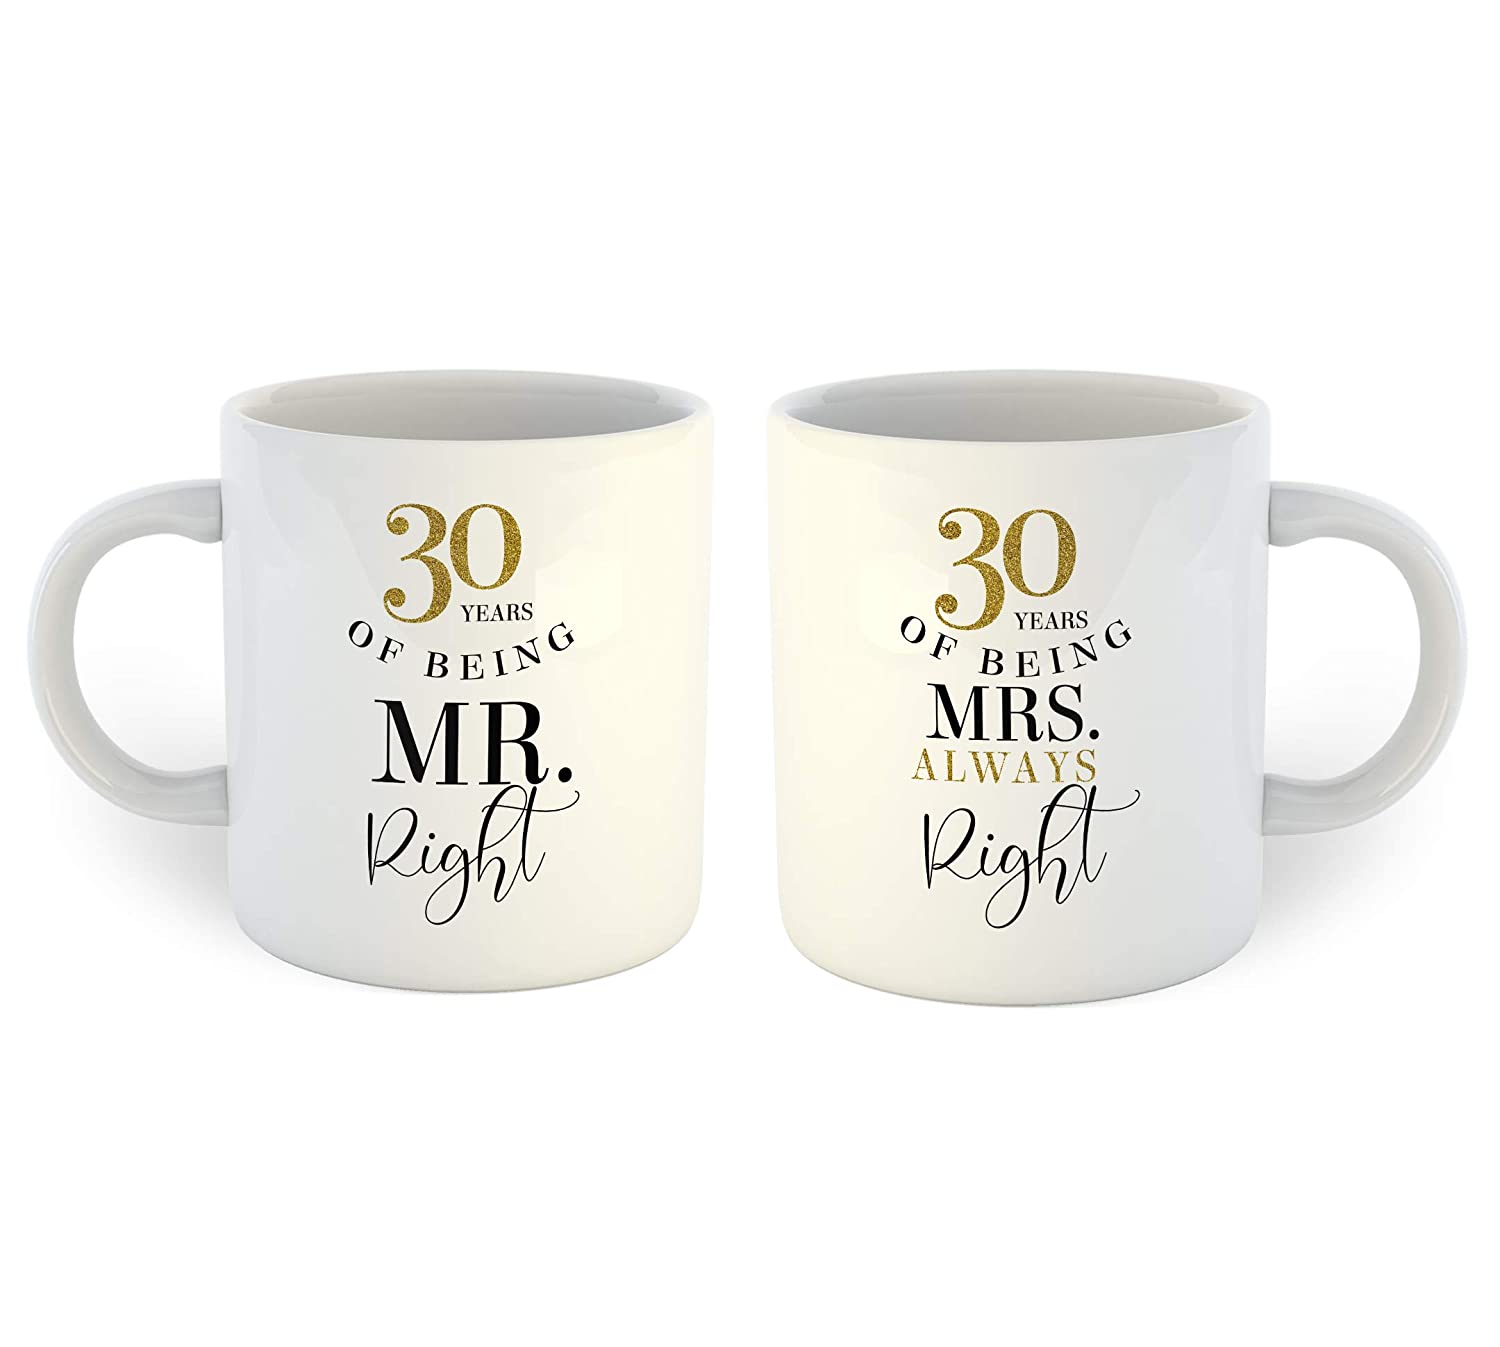 30th-anniversary-gifts-mugs